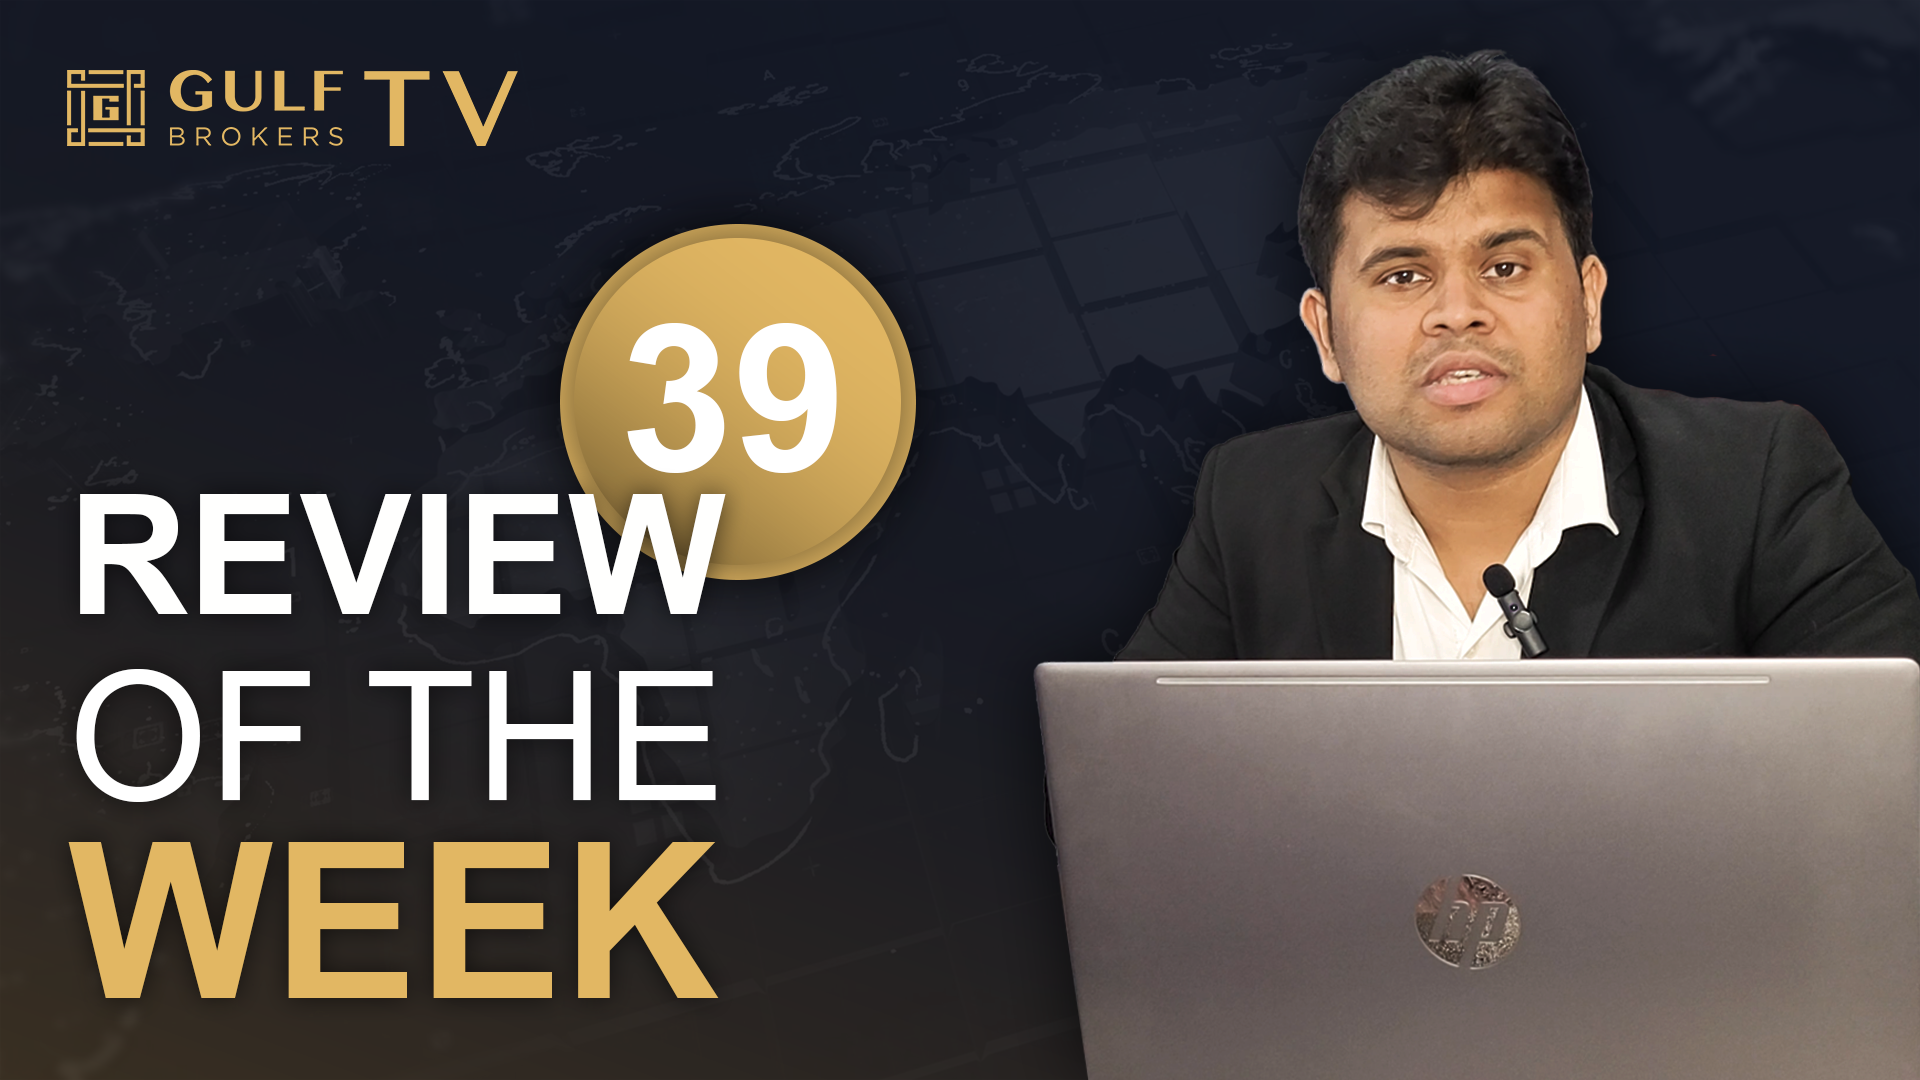 Gulfbrokers | Gulf Brokers | Review of the week 39 | Syam KP